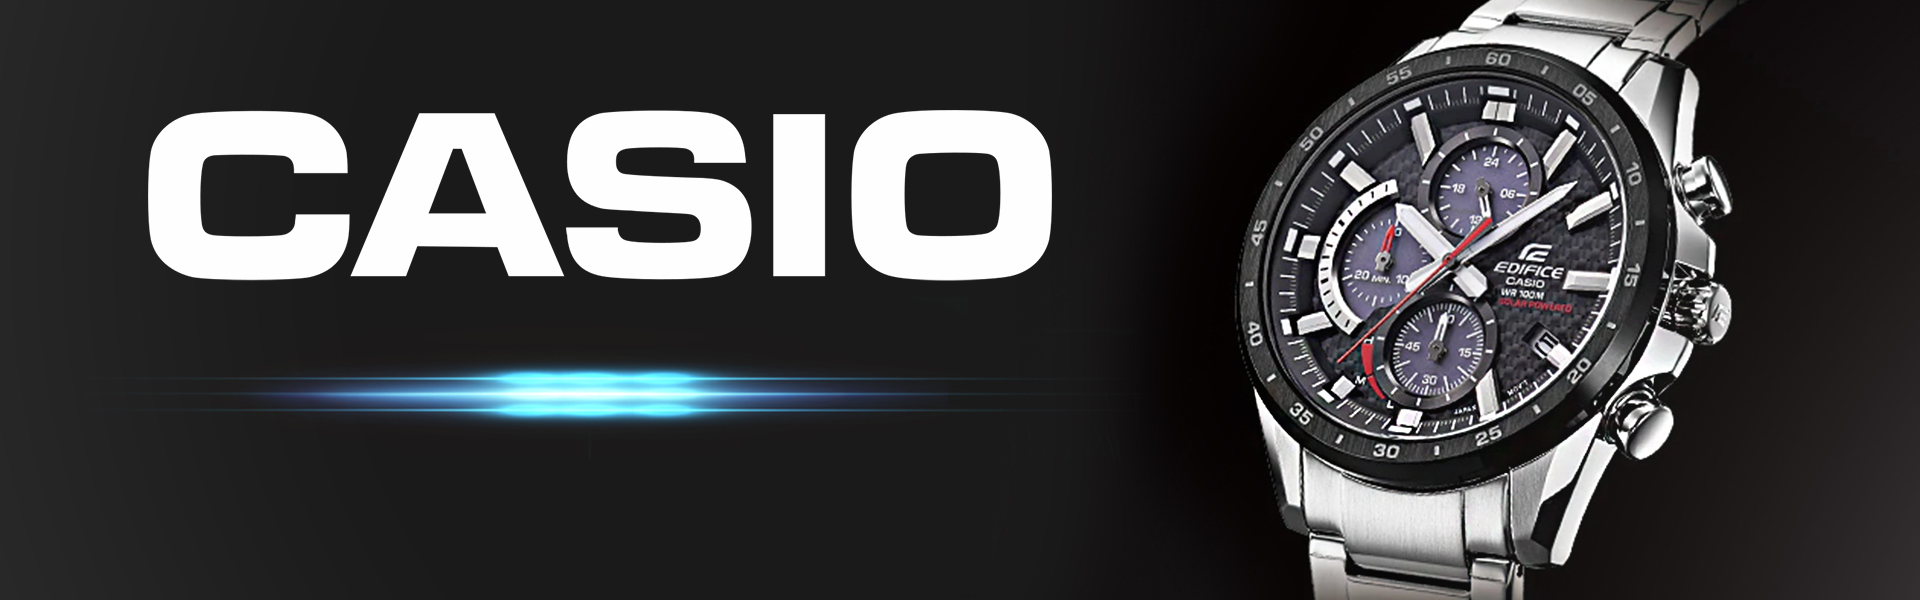 Vīriešu rokas pulkstenis Casio Edifice EFV-520L-7AVUEF 891108129 Casio